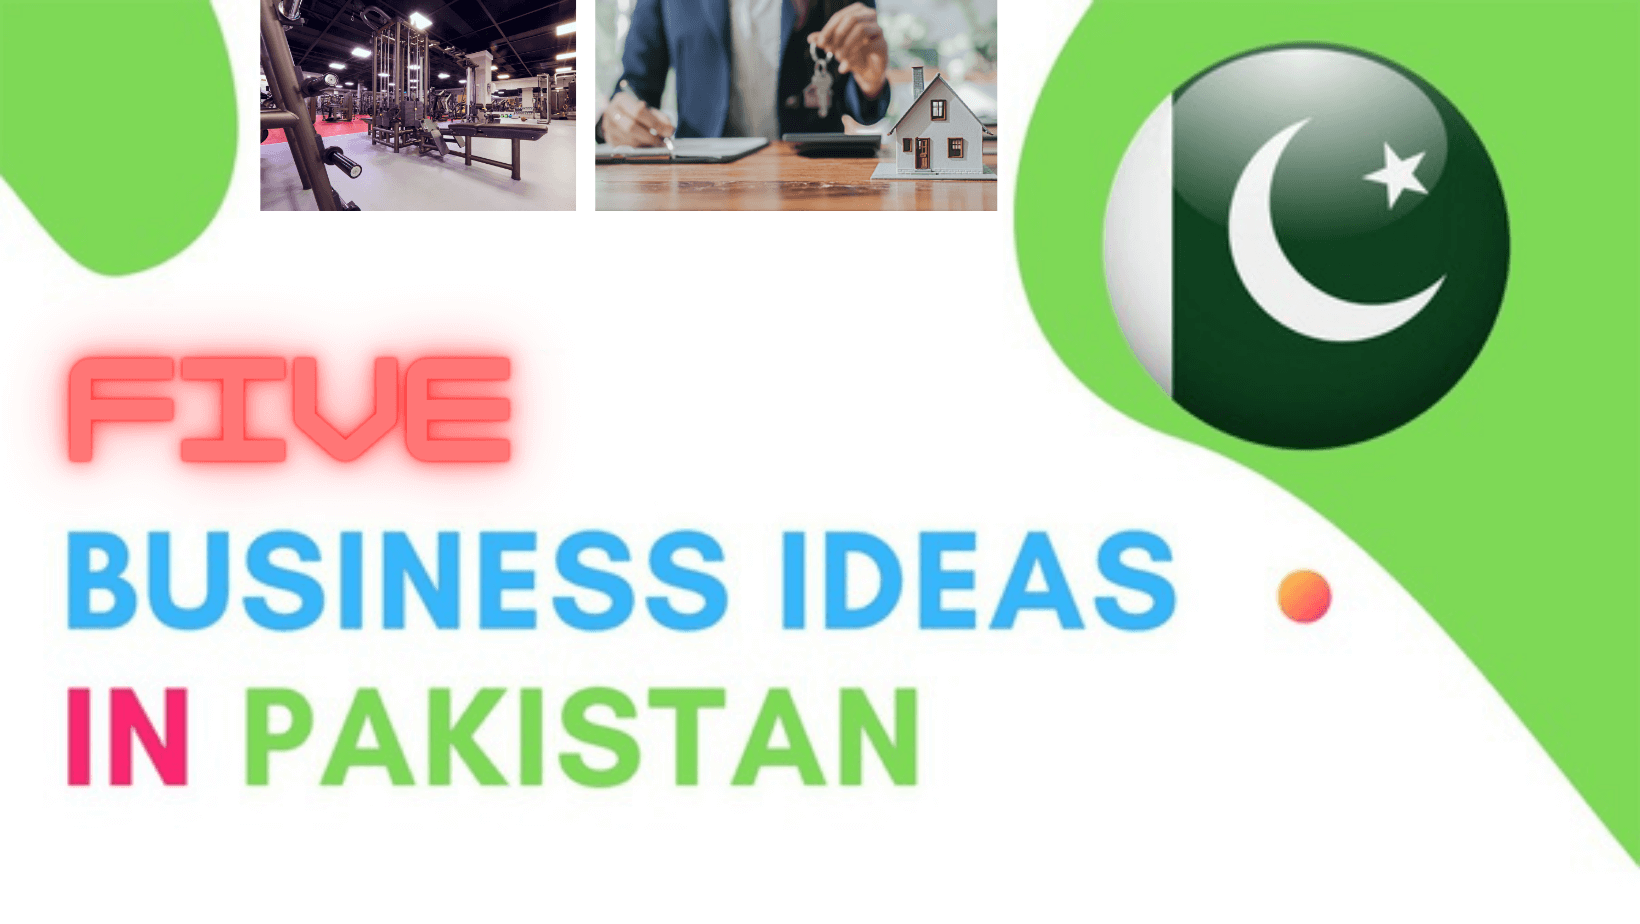 Five most successful business ideas in Pakistan